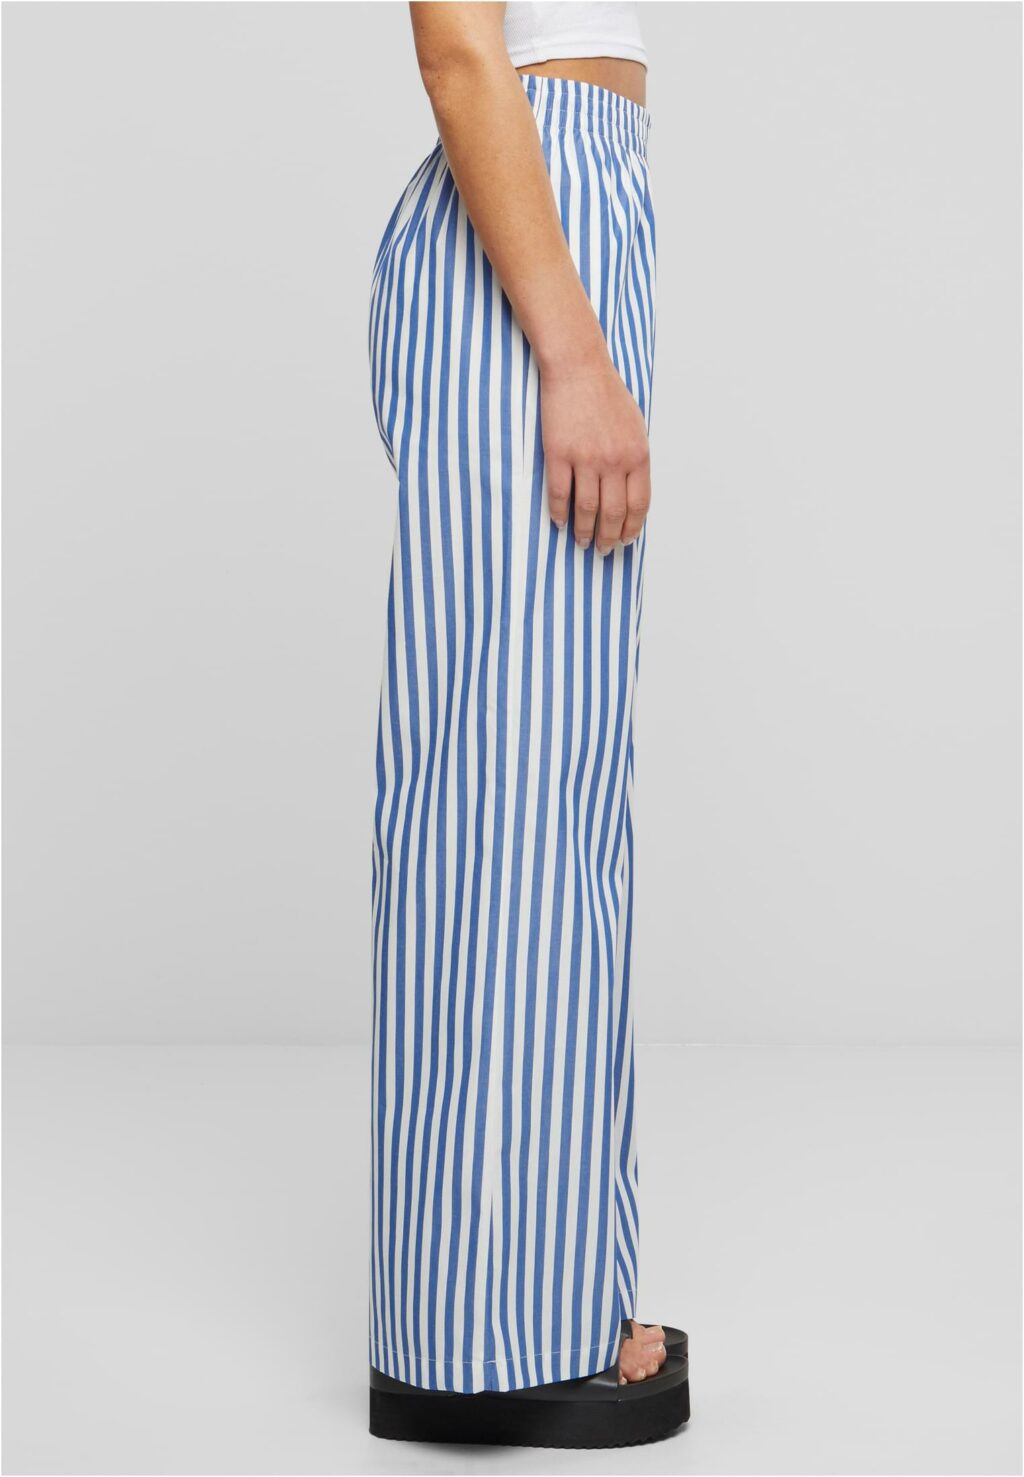 Urban Classics Ladies Striped Loose Pants white/blue TB6844